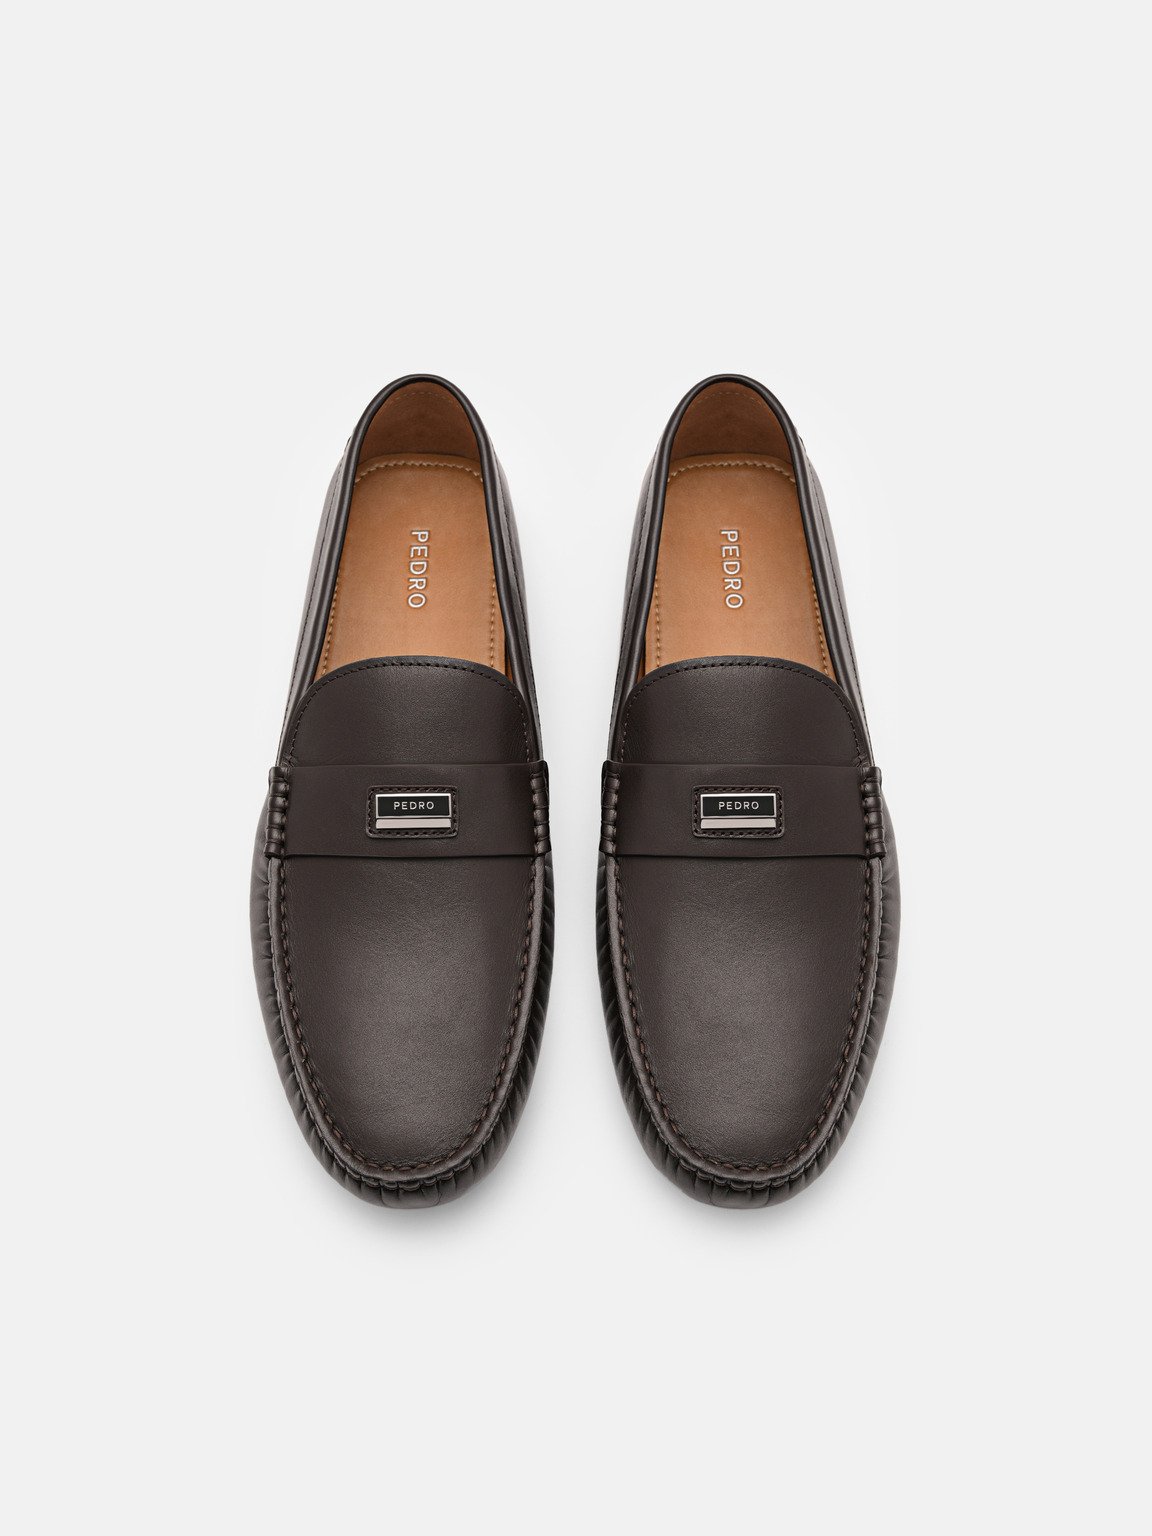 Allen Leather Driving Shoes, Dark Brown